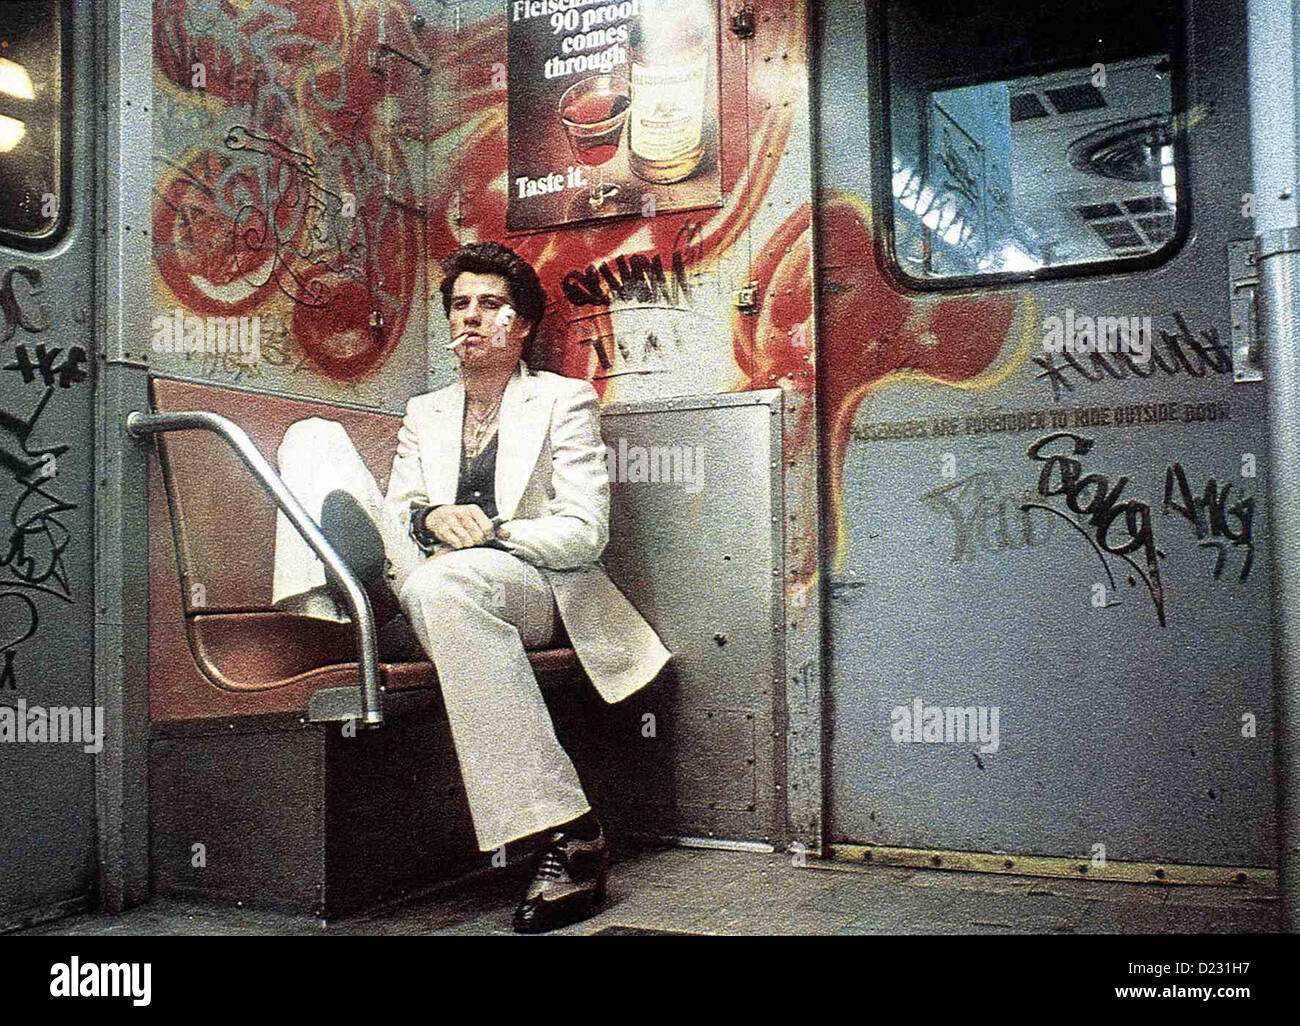 Nur Samstag Nacht   Saturday Night Fever   Tony Manero (John Travolta) *** Local Caption *** 1977  -- Stock Photo